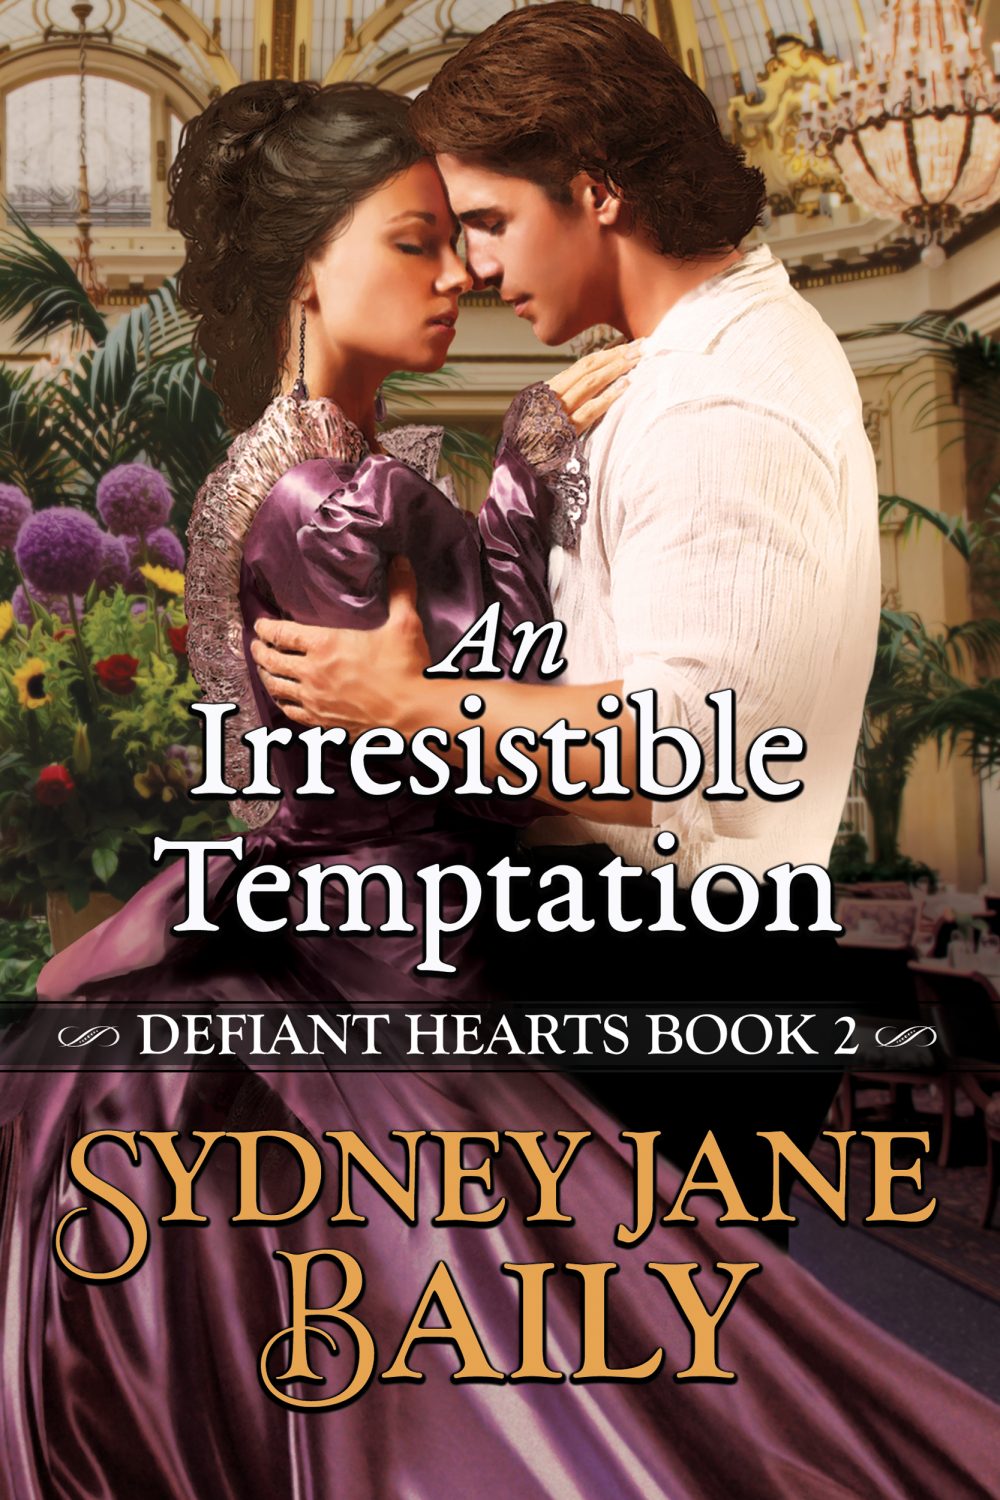 An Irresistible Temptation -Sydney Jane Baily